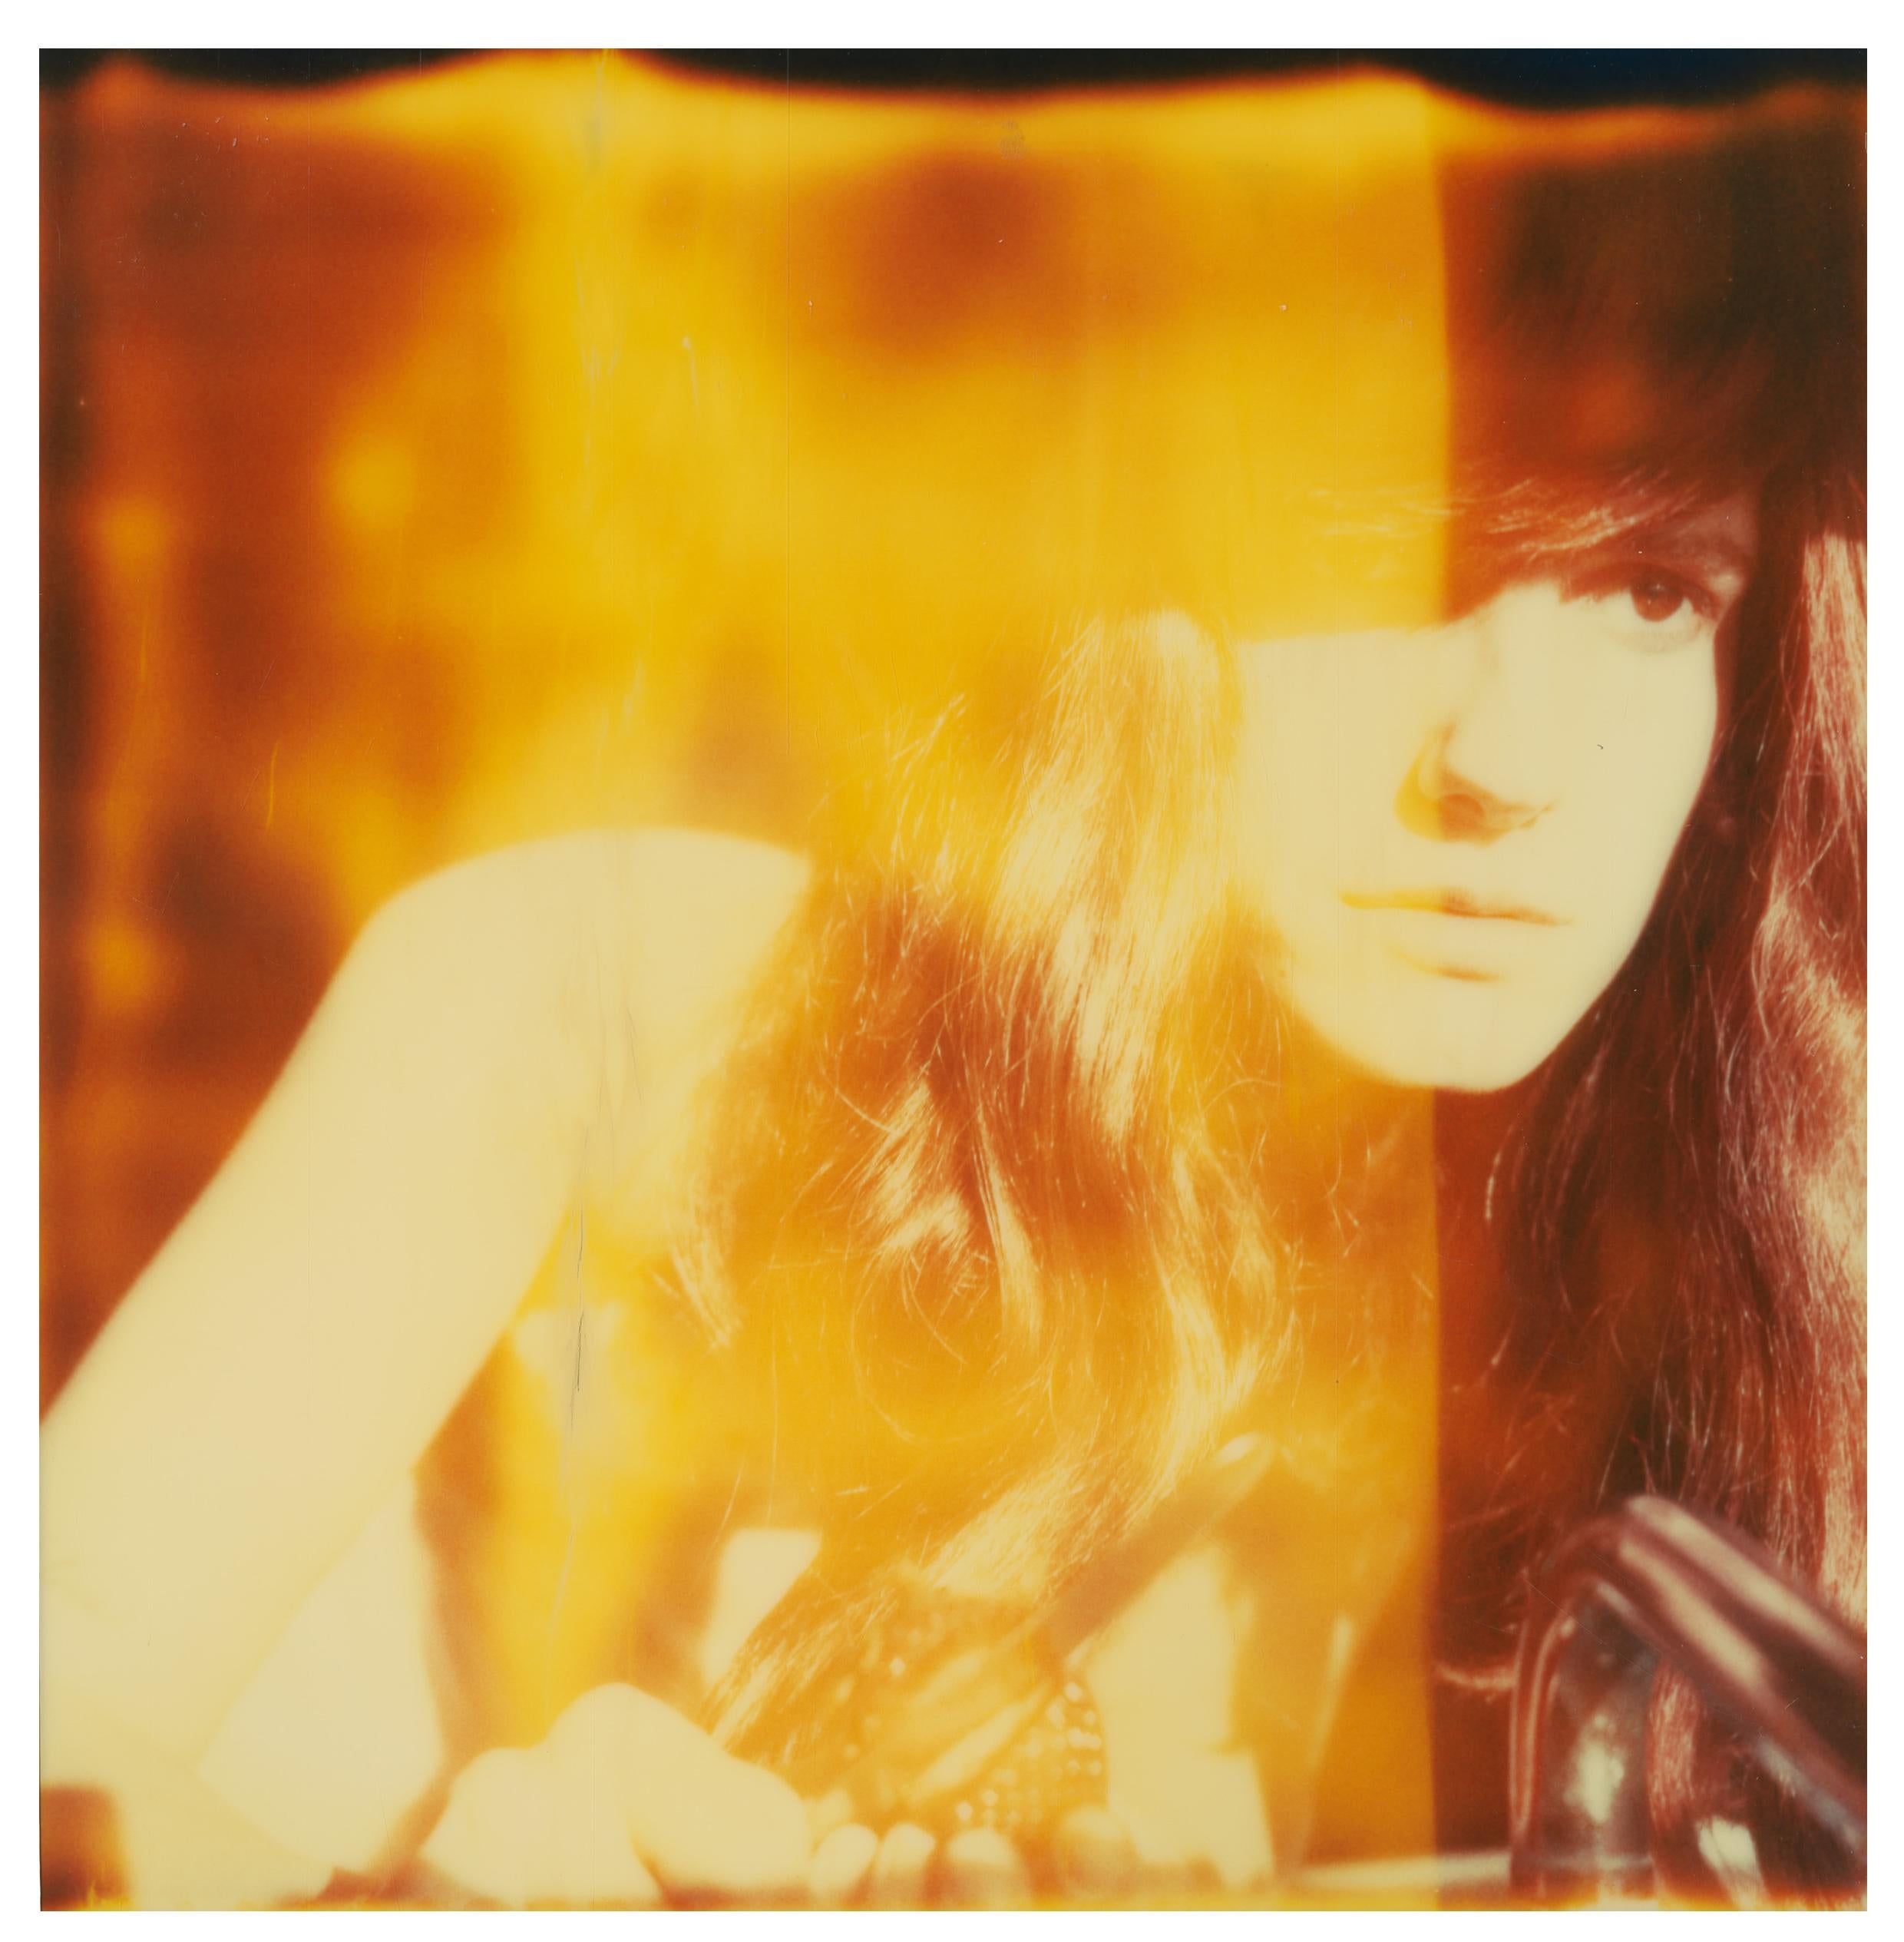 Stefanie Schneider Color Photograph - Burning - Contemporary, Figurative, expired, Polaroid, analog